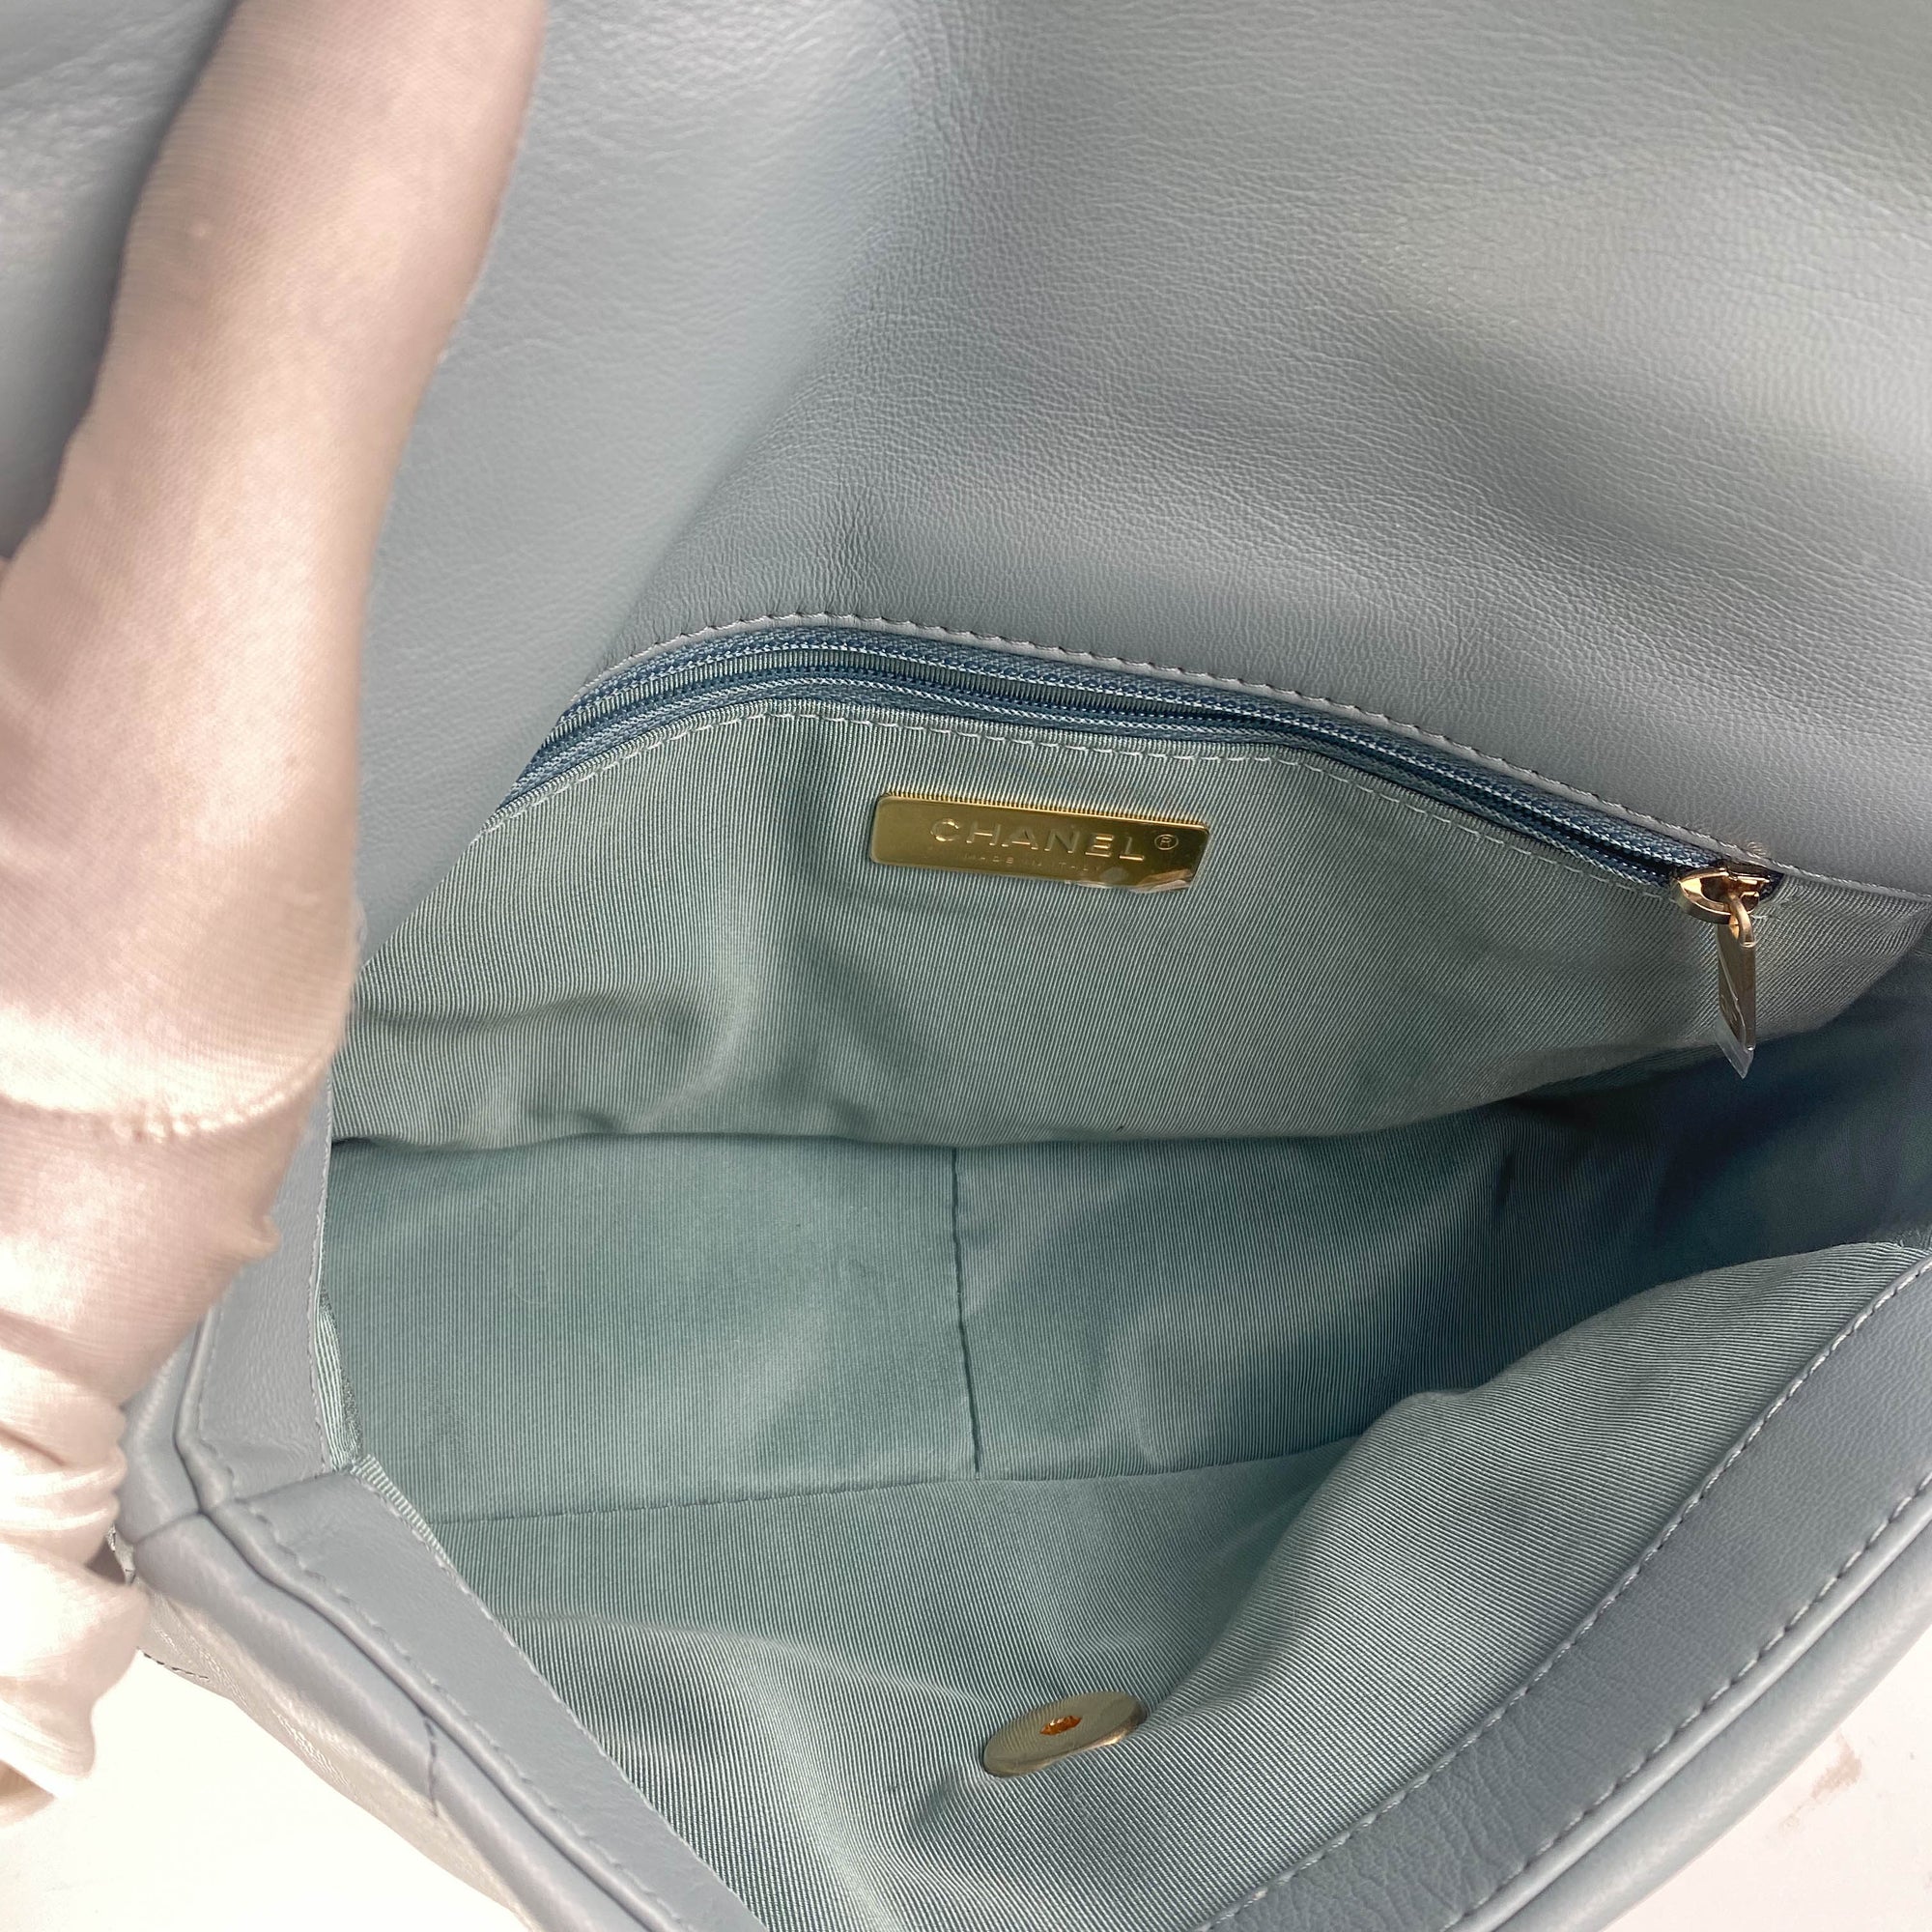 Chanel 19 leather handbag Chanel Grey in Leather - 24389949